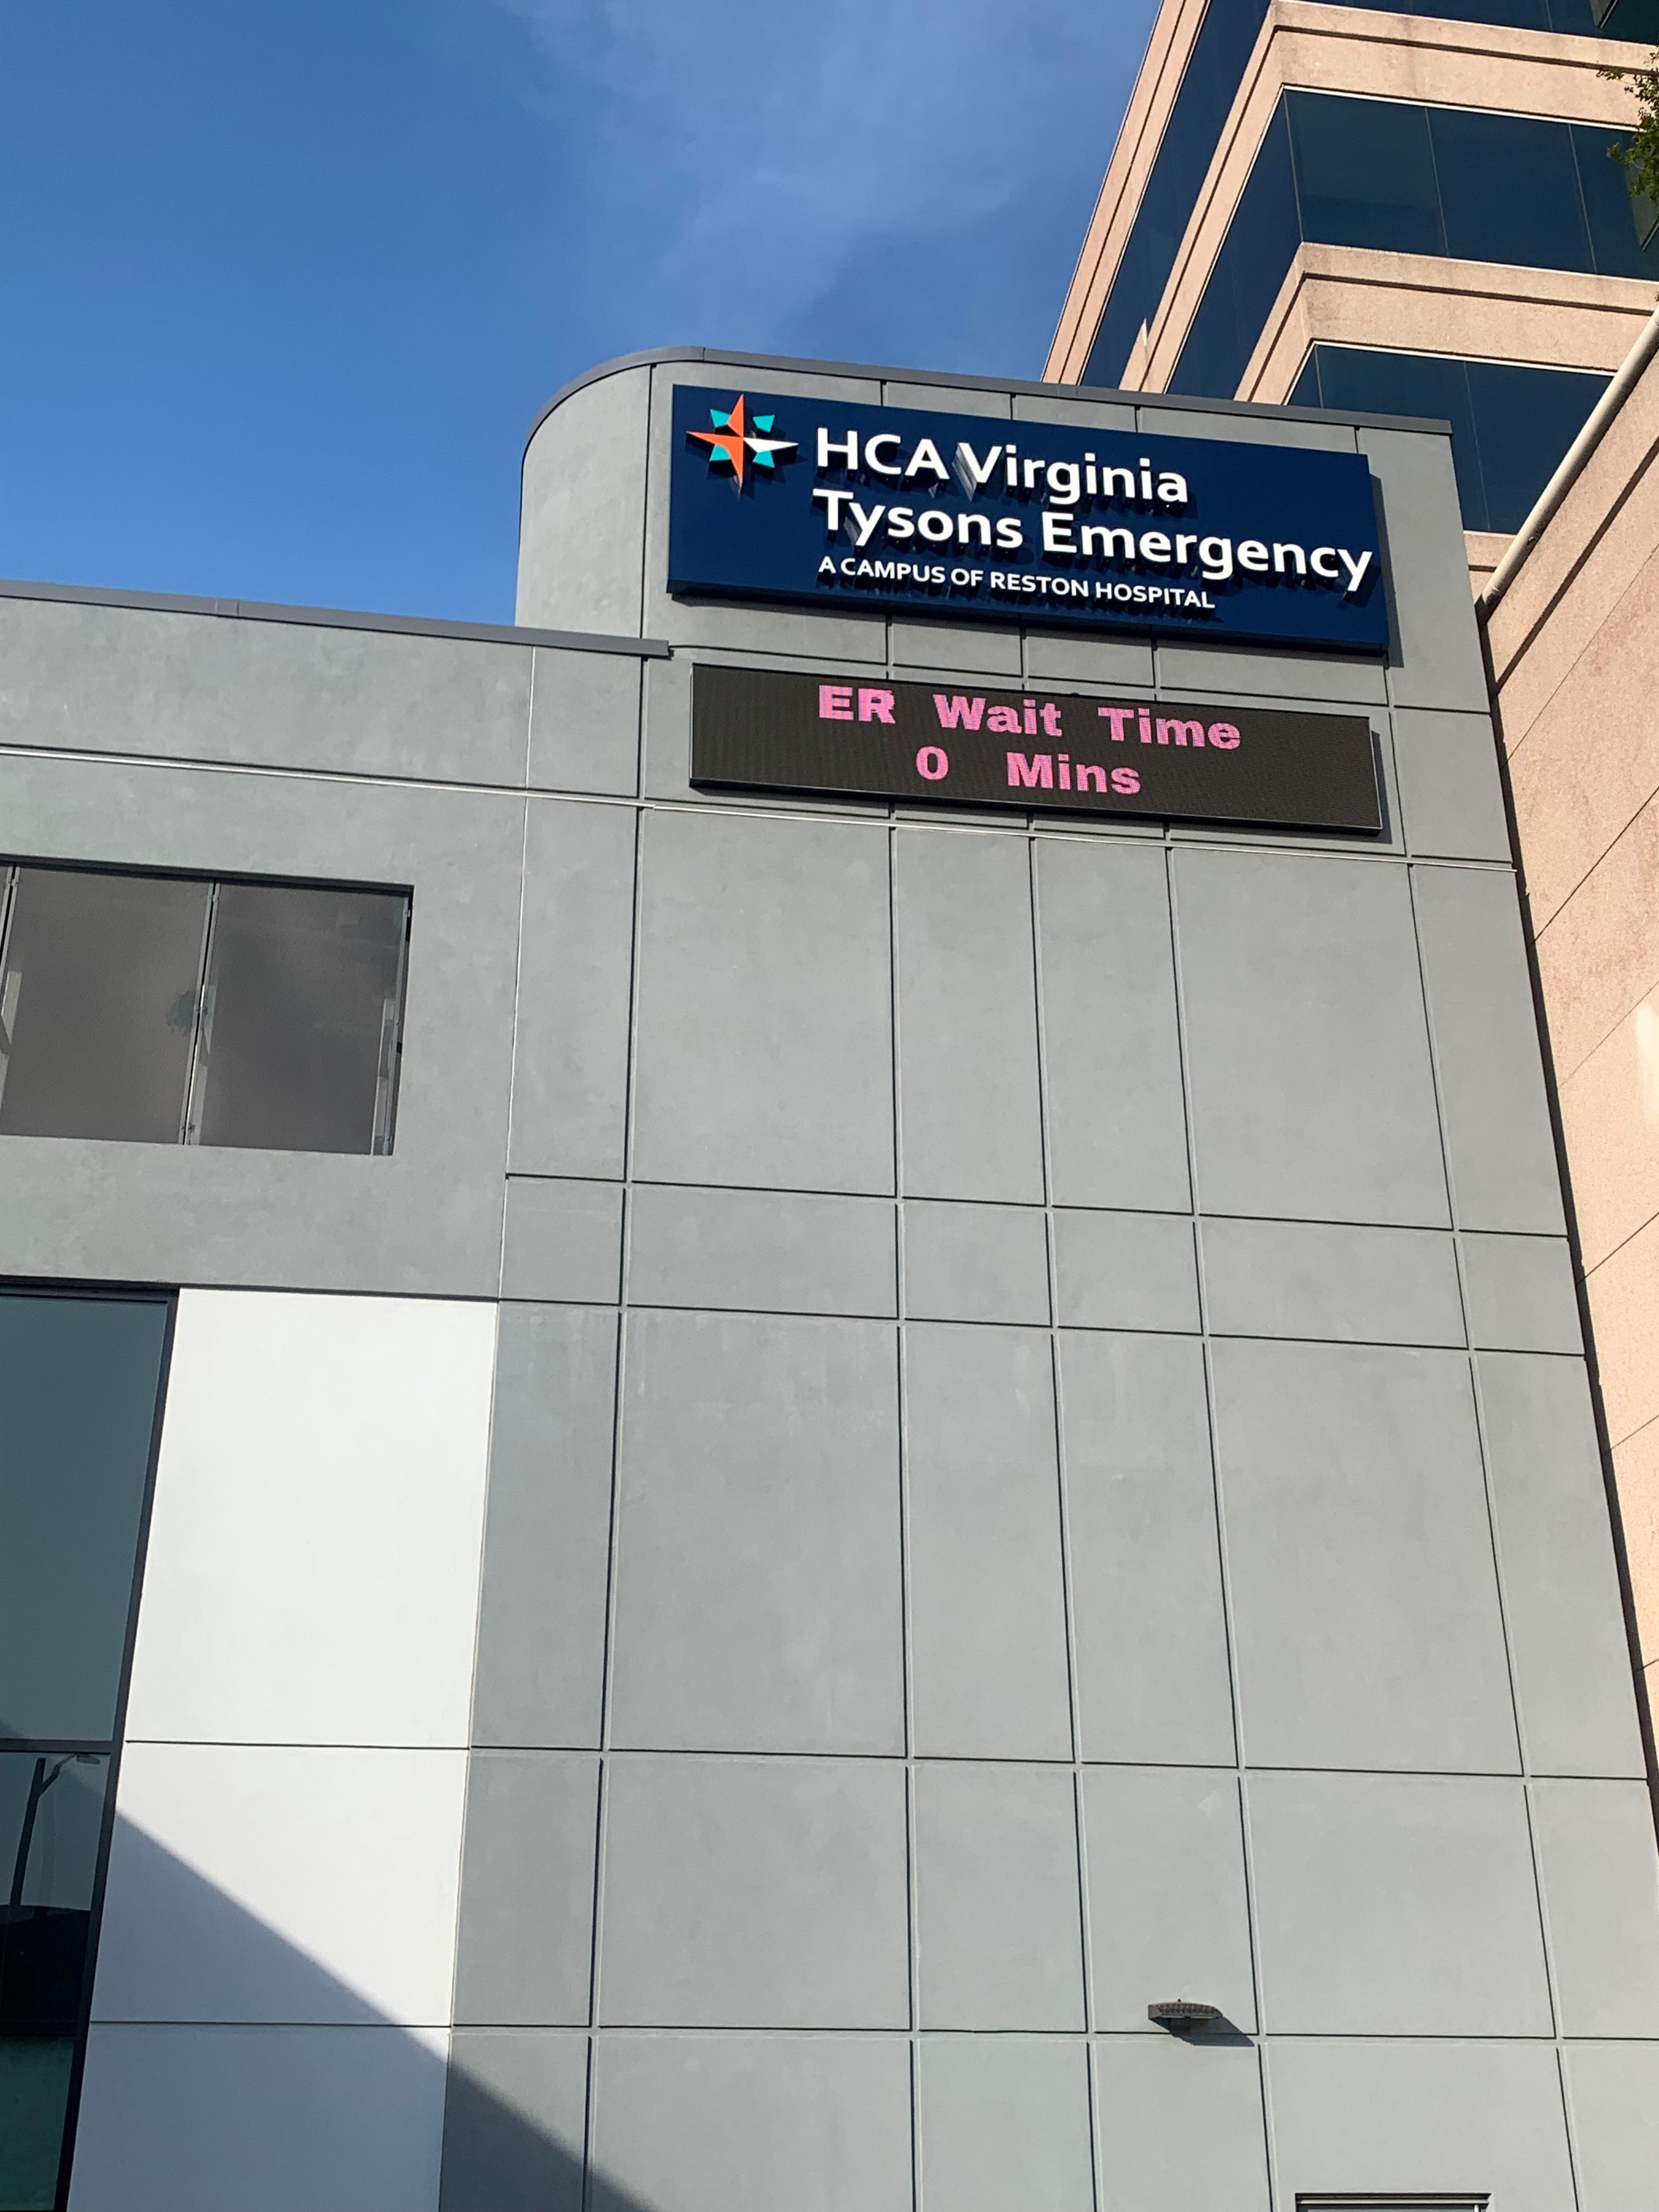 HCA Virginia Tyson's Emergency exterior daytime photo